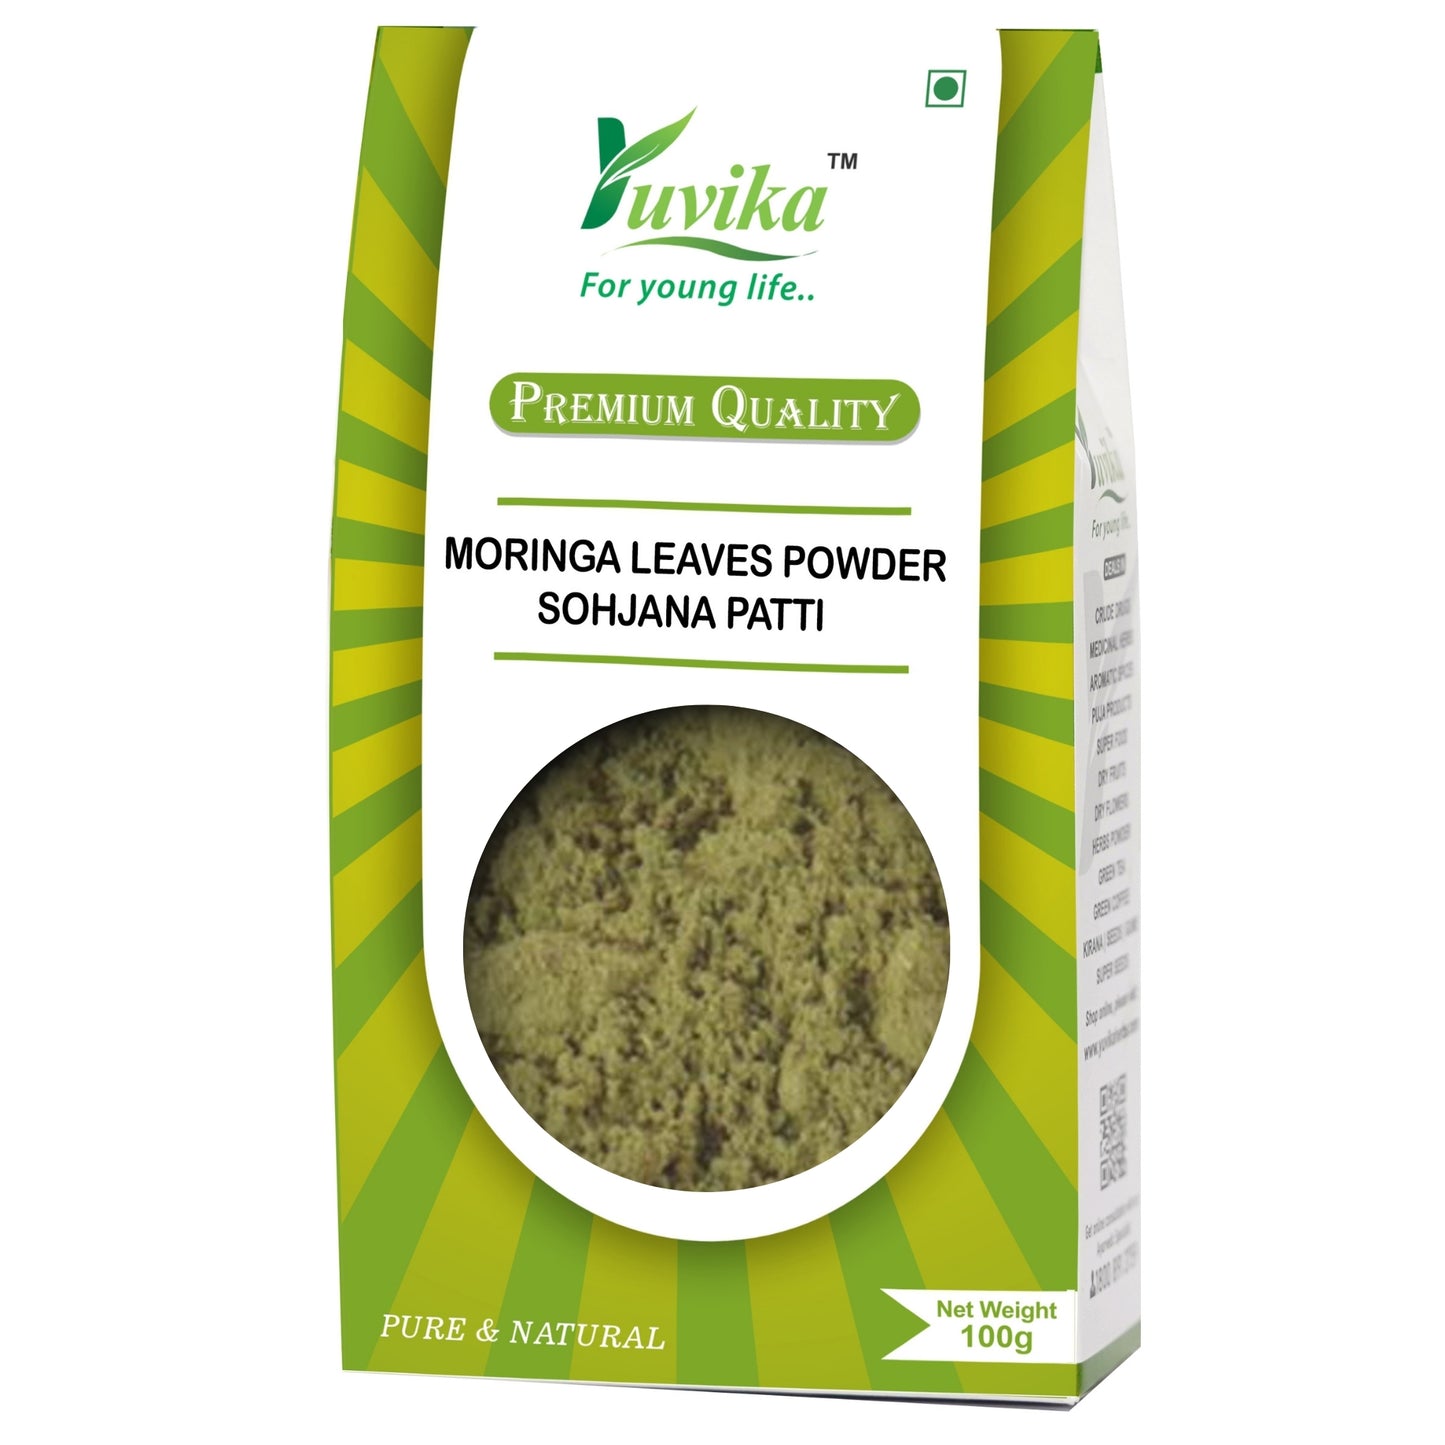 Moringa Leaves Powder - Moringa oleifera - Sohjana Patti Powder (100g)